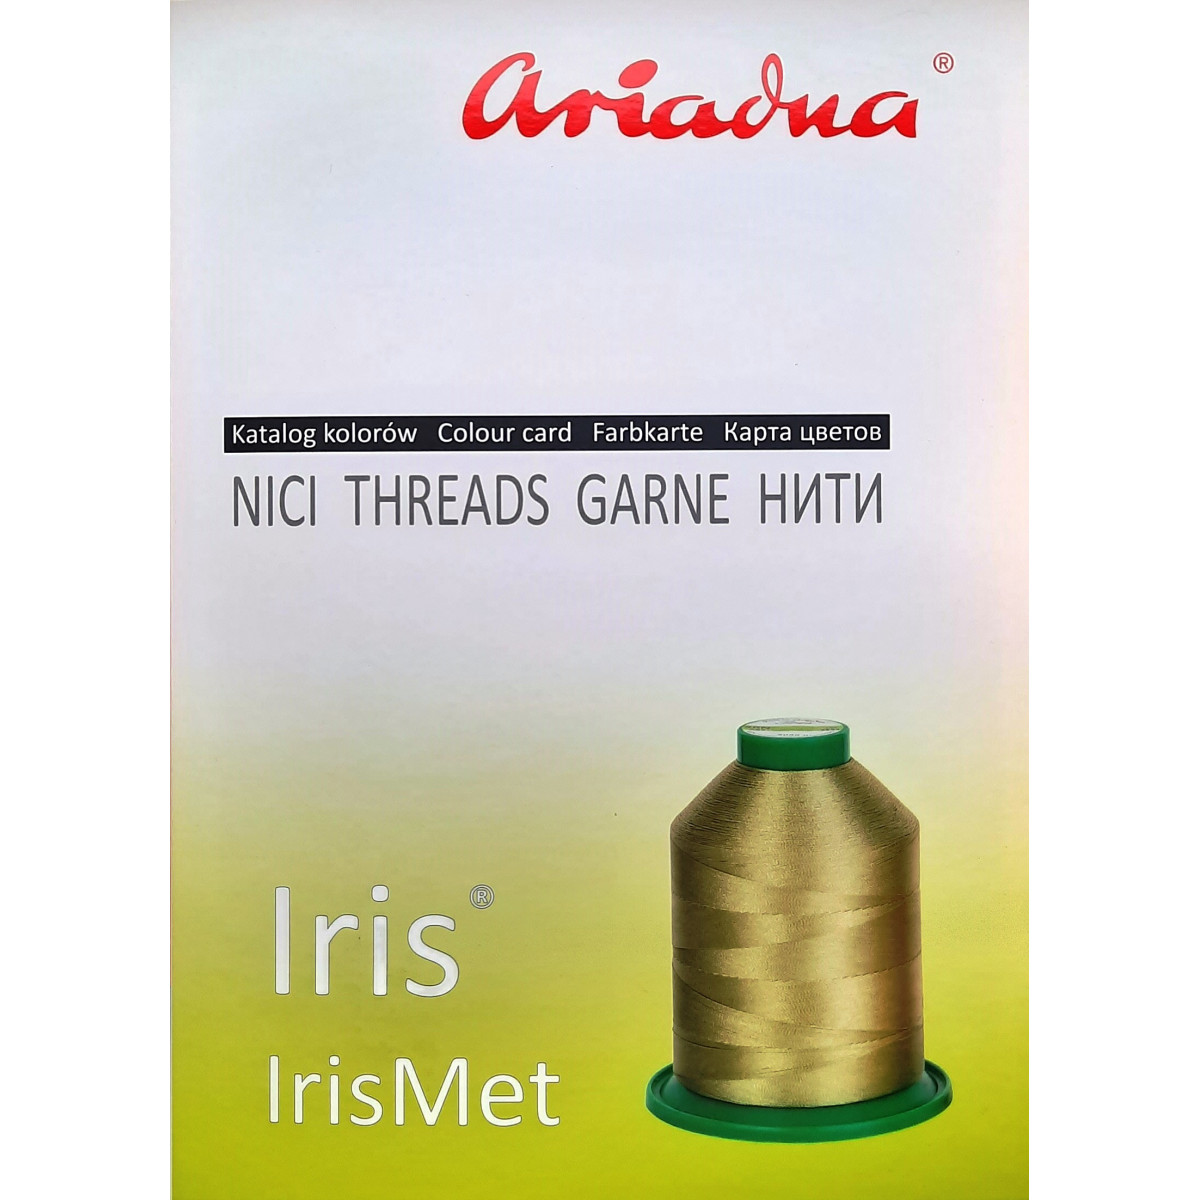 Katalog kolorów nici Iris i IrisMet